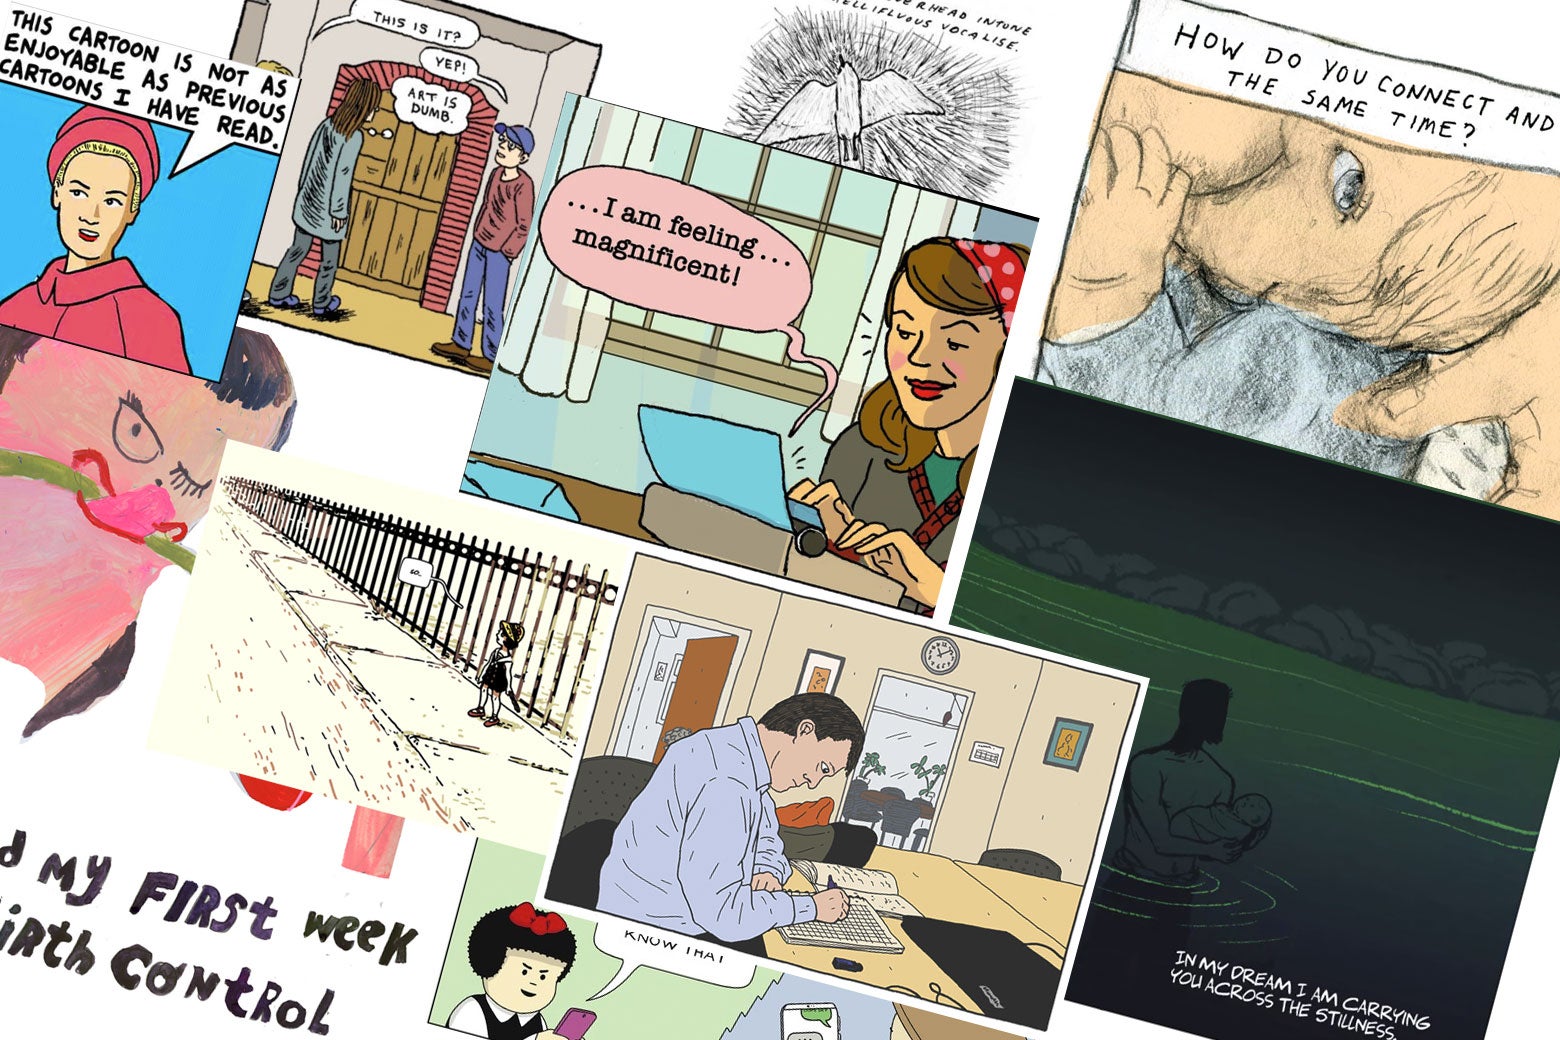 Collage of web comics